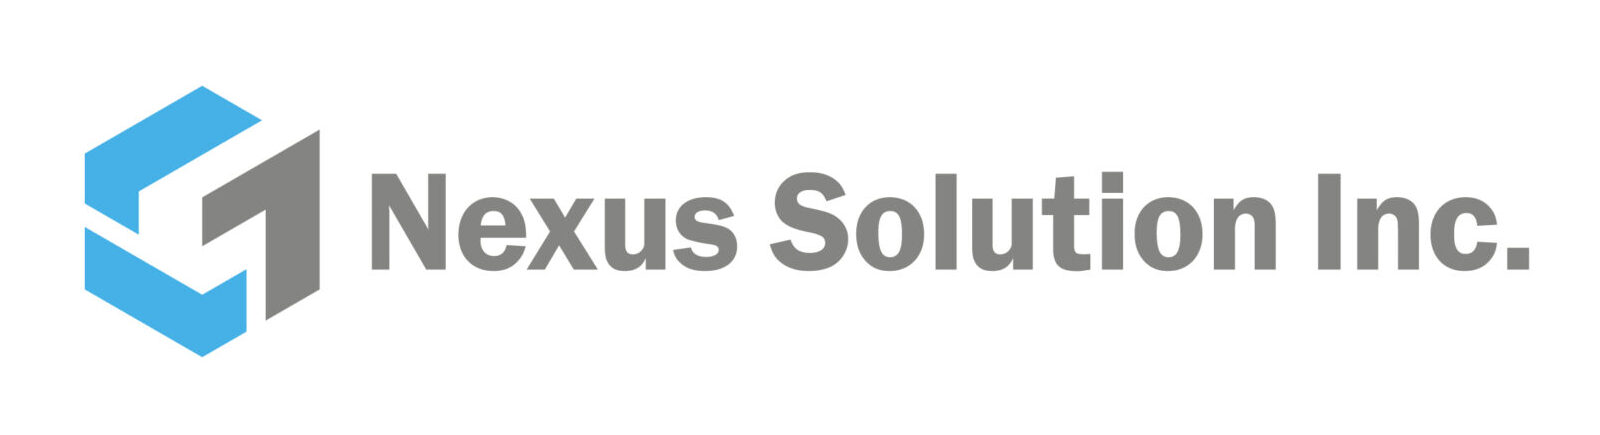 Nexus Solution